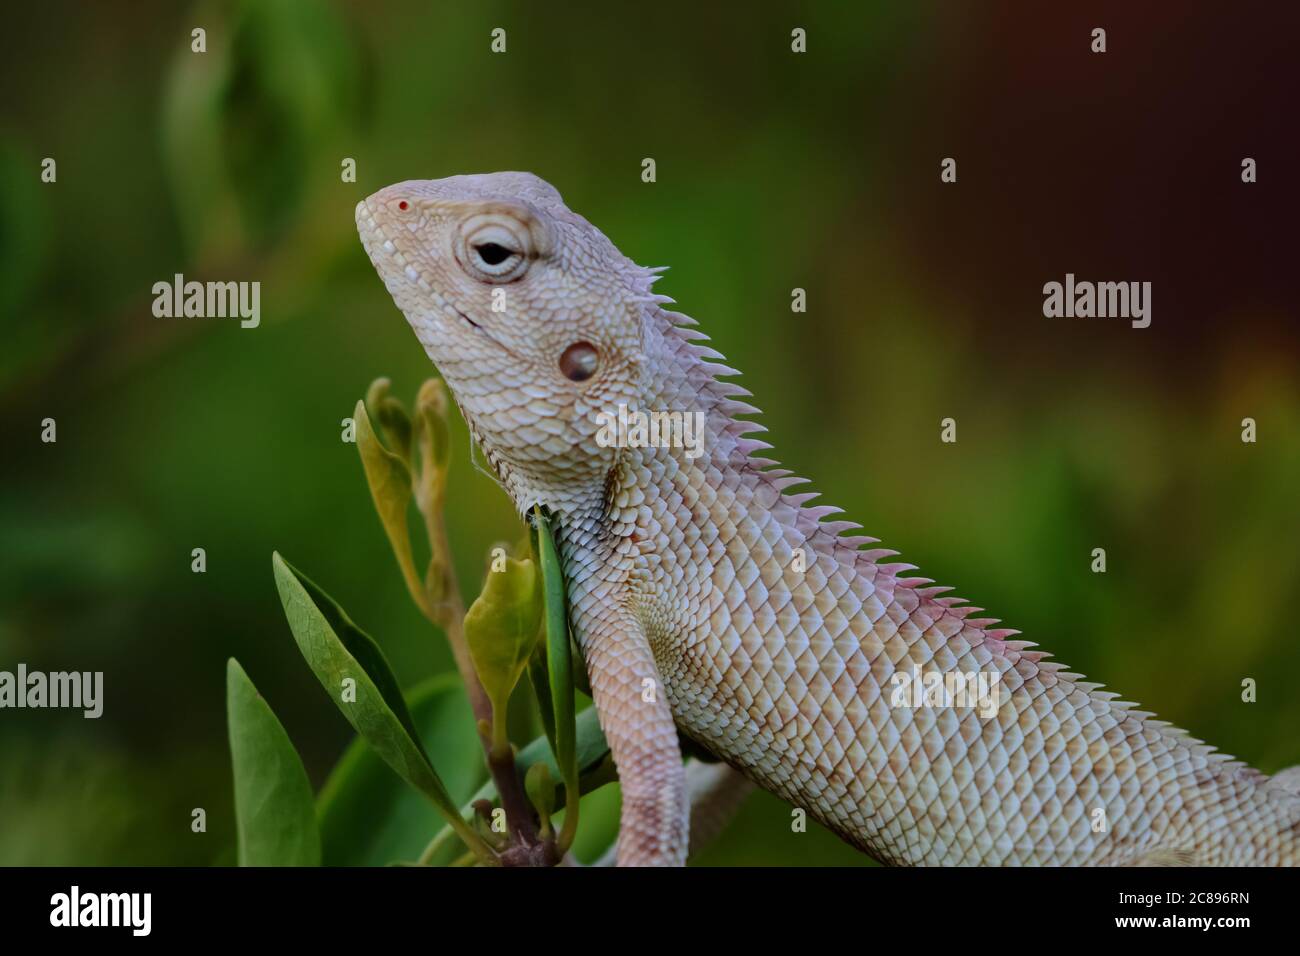 Image of an oriental garden lizard also called eastern garden lizard or bloodsucker or changeable lizard Stock Photo